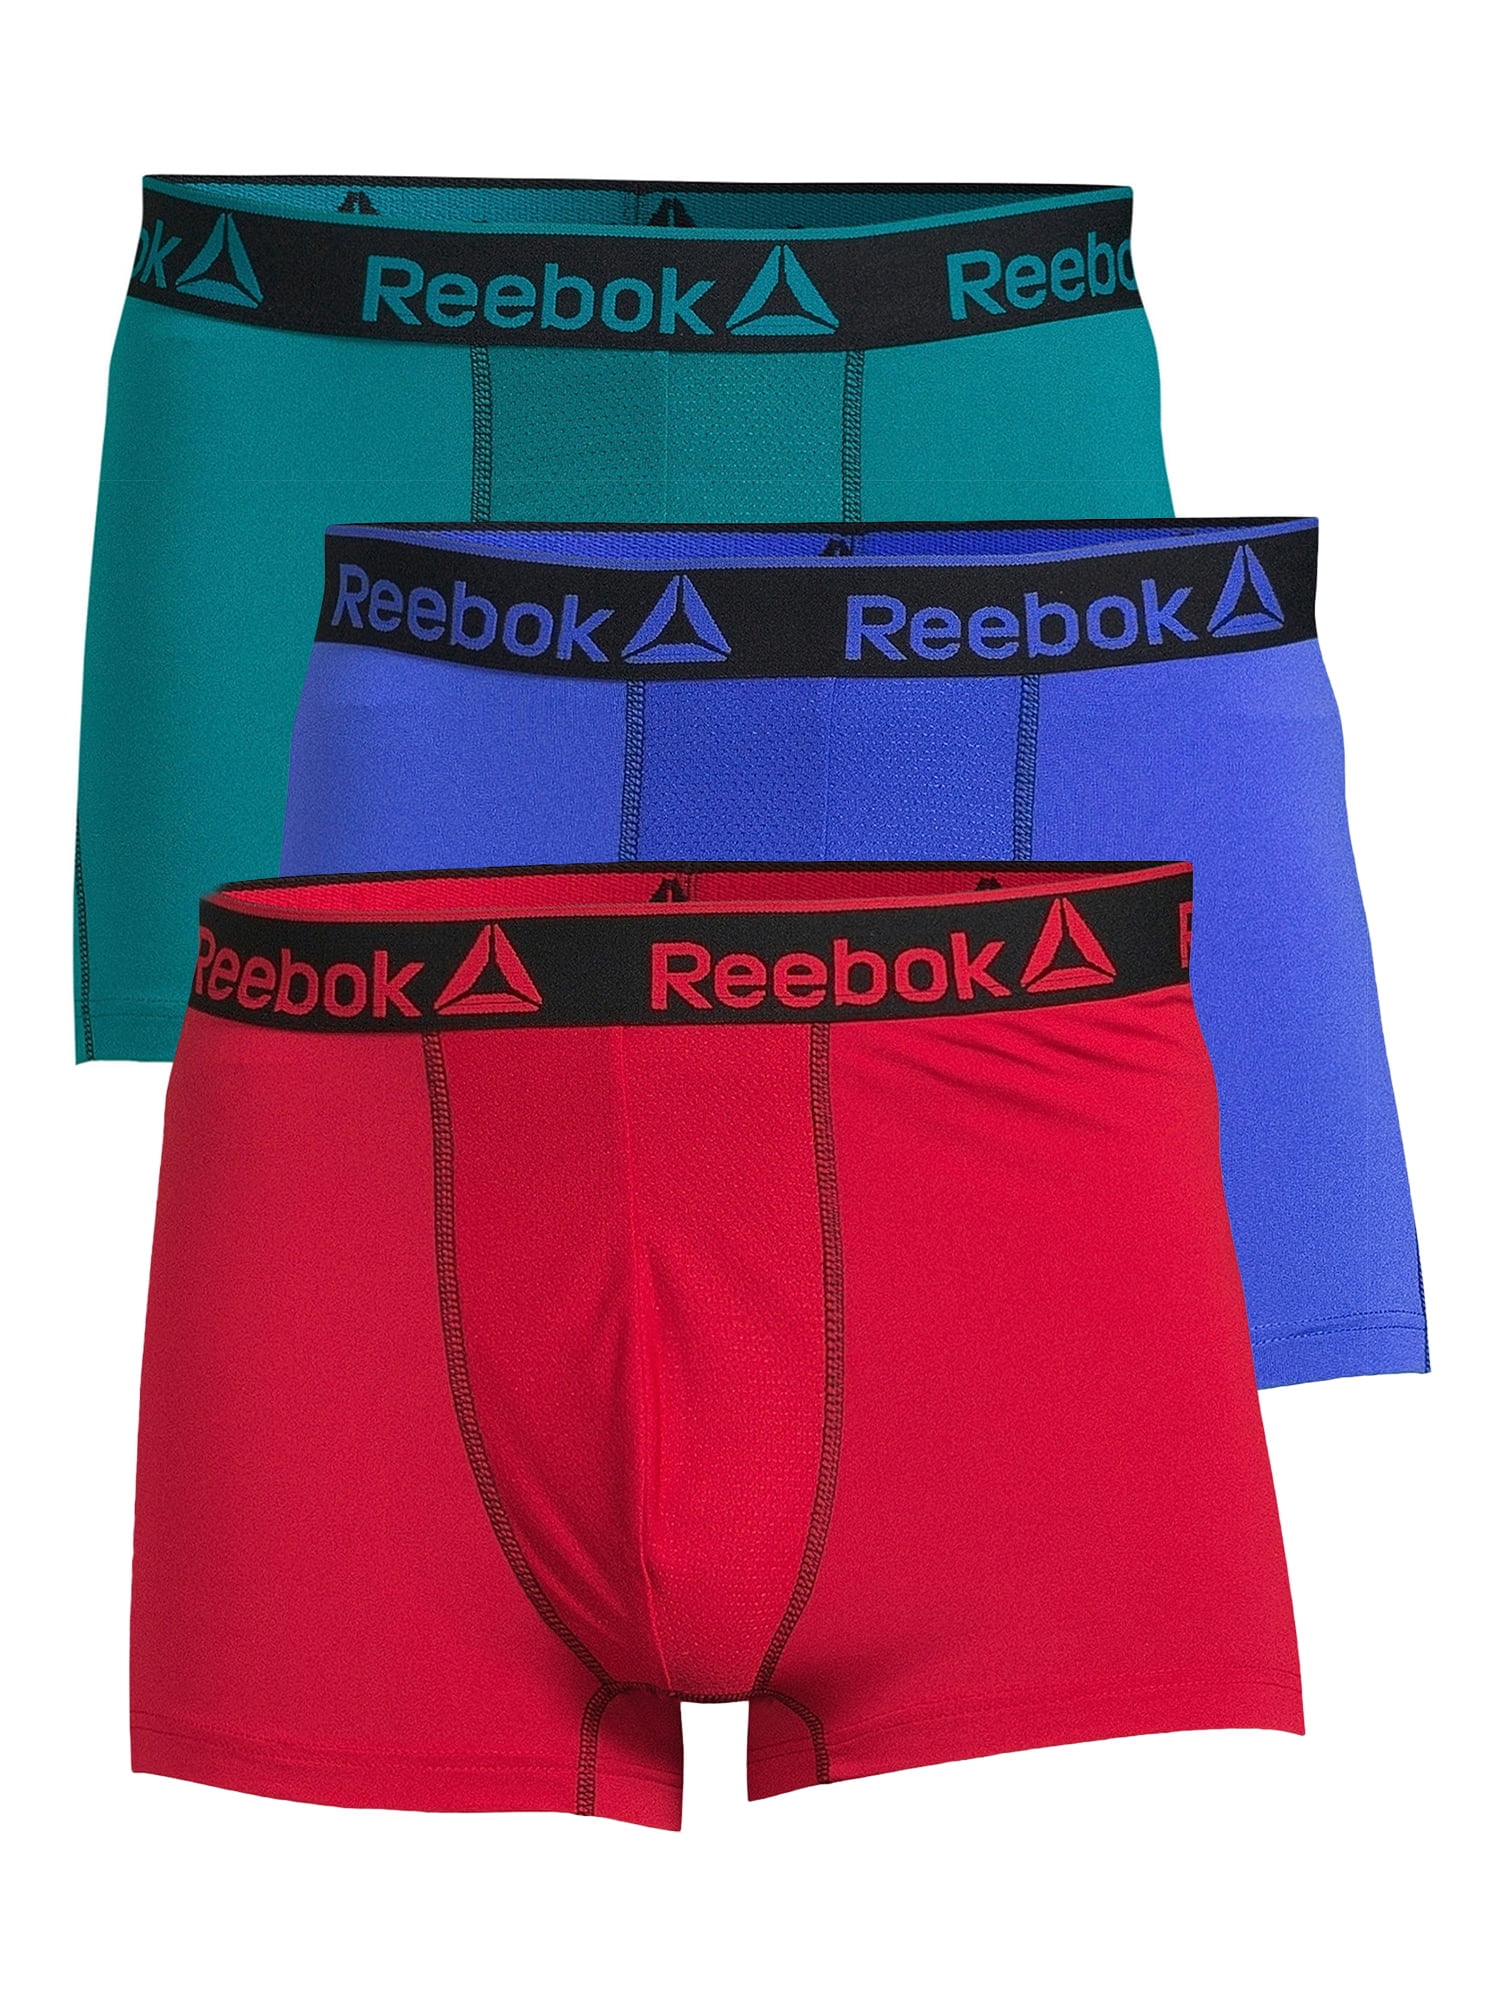 Reebok Men’s Boxer Briefs, 3-Pack - Walmart.com